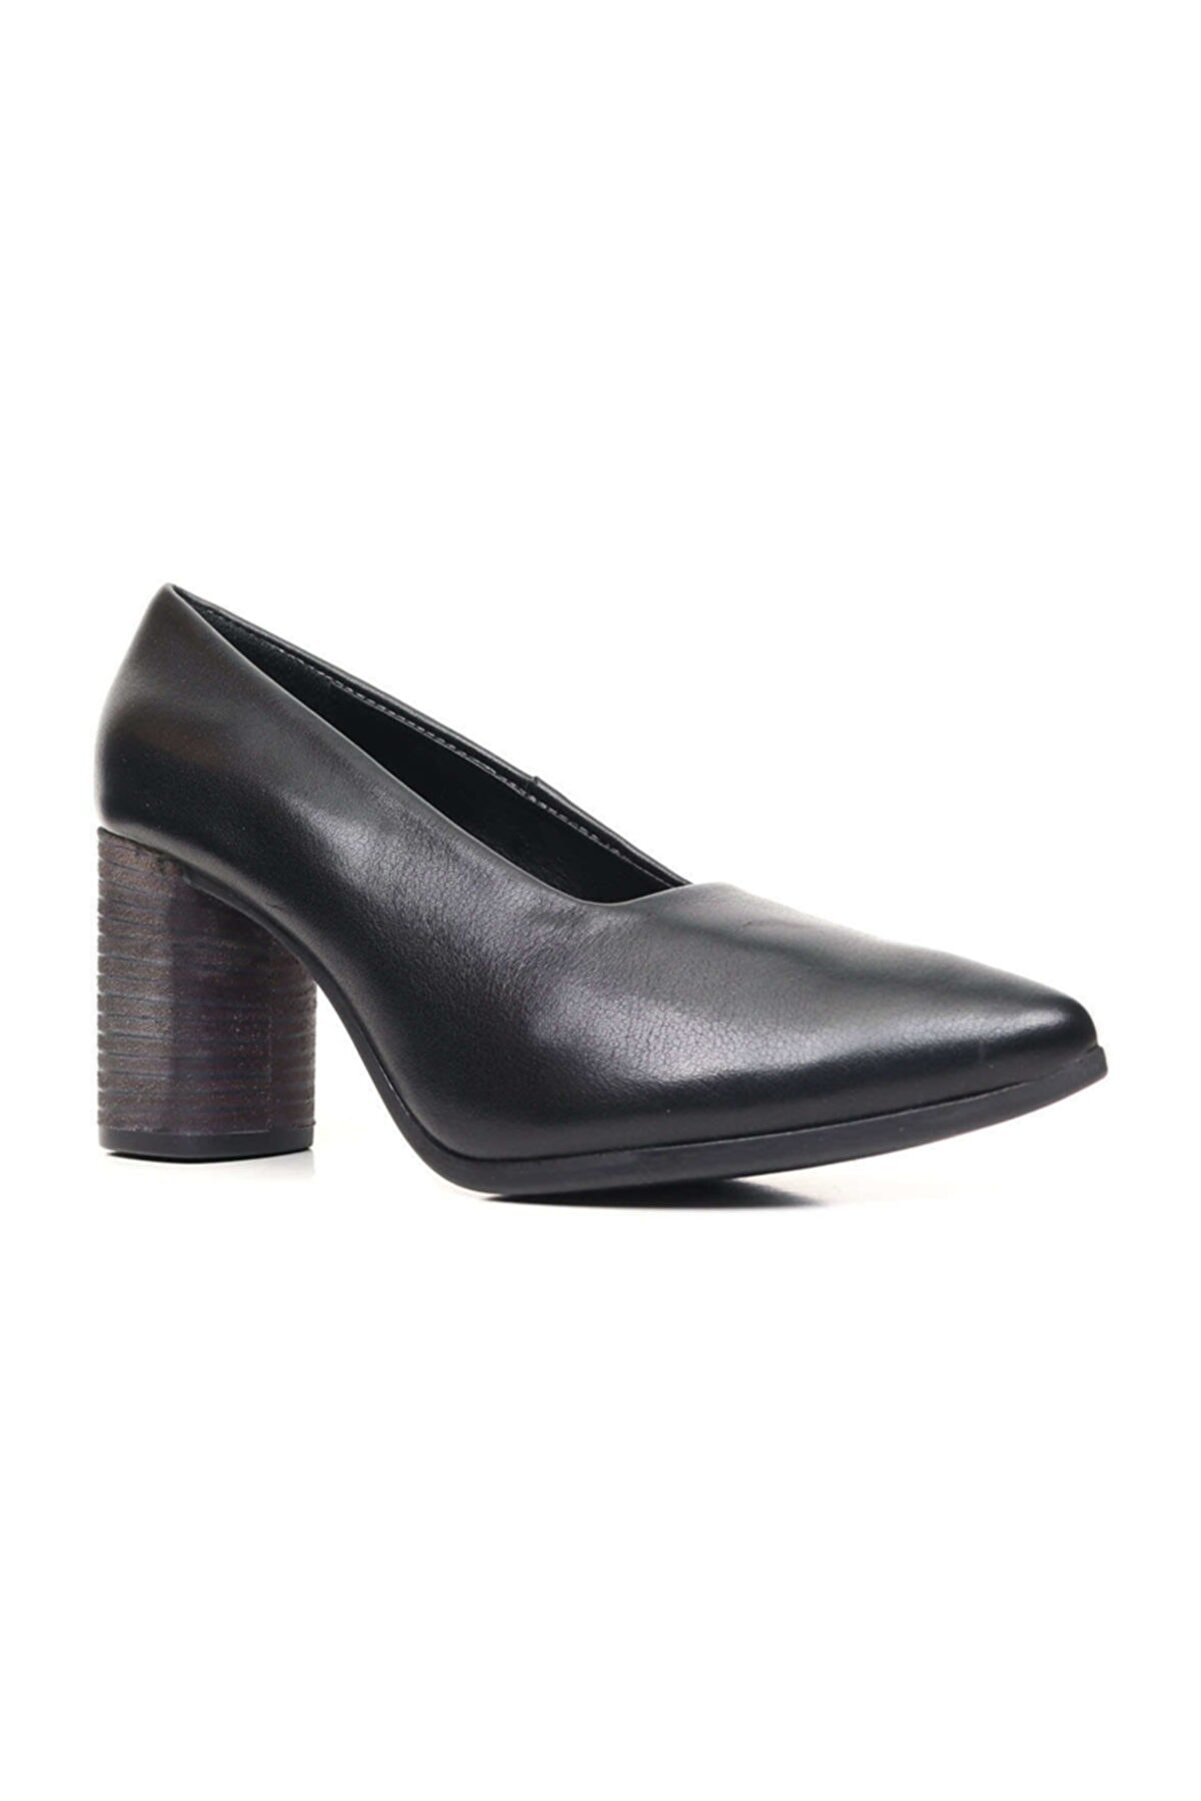 BUENO Shoes  Kadın Ayakkabı 9p1002